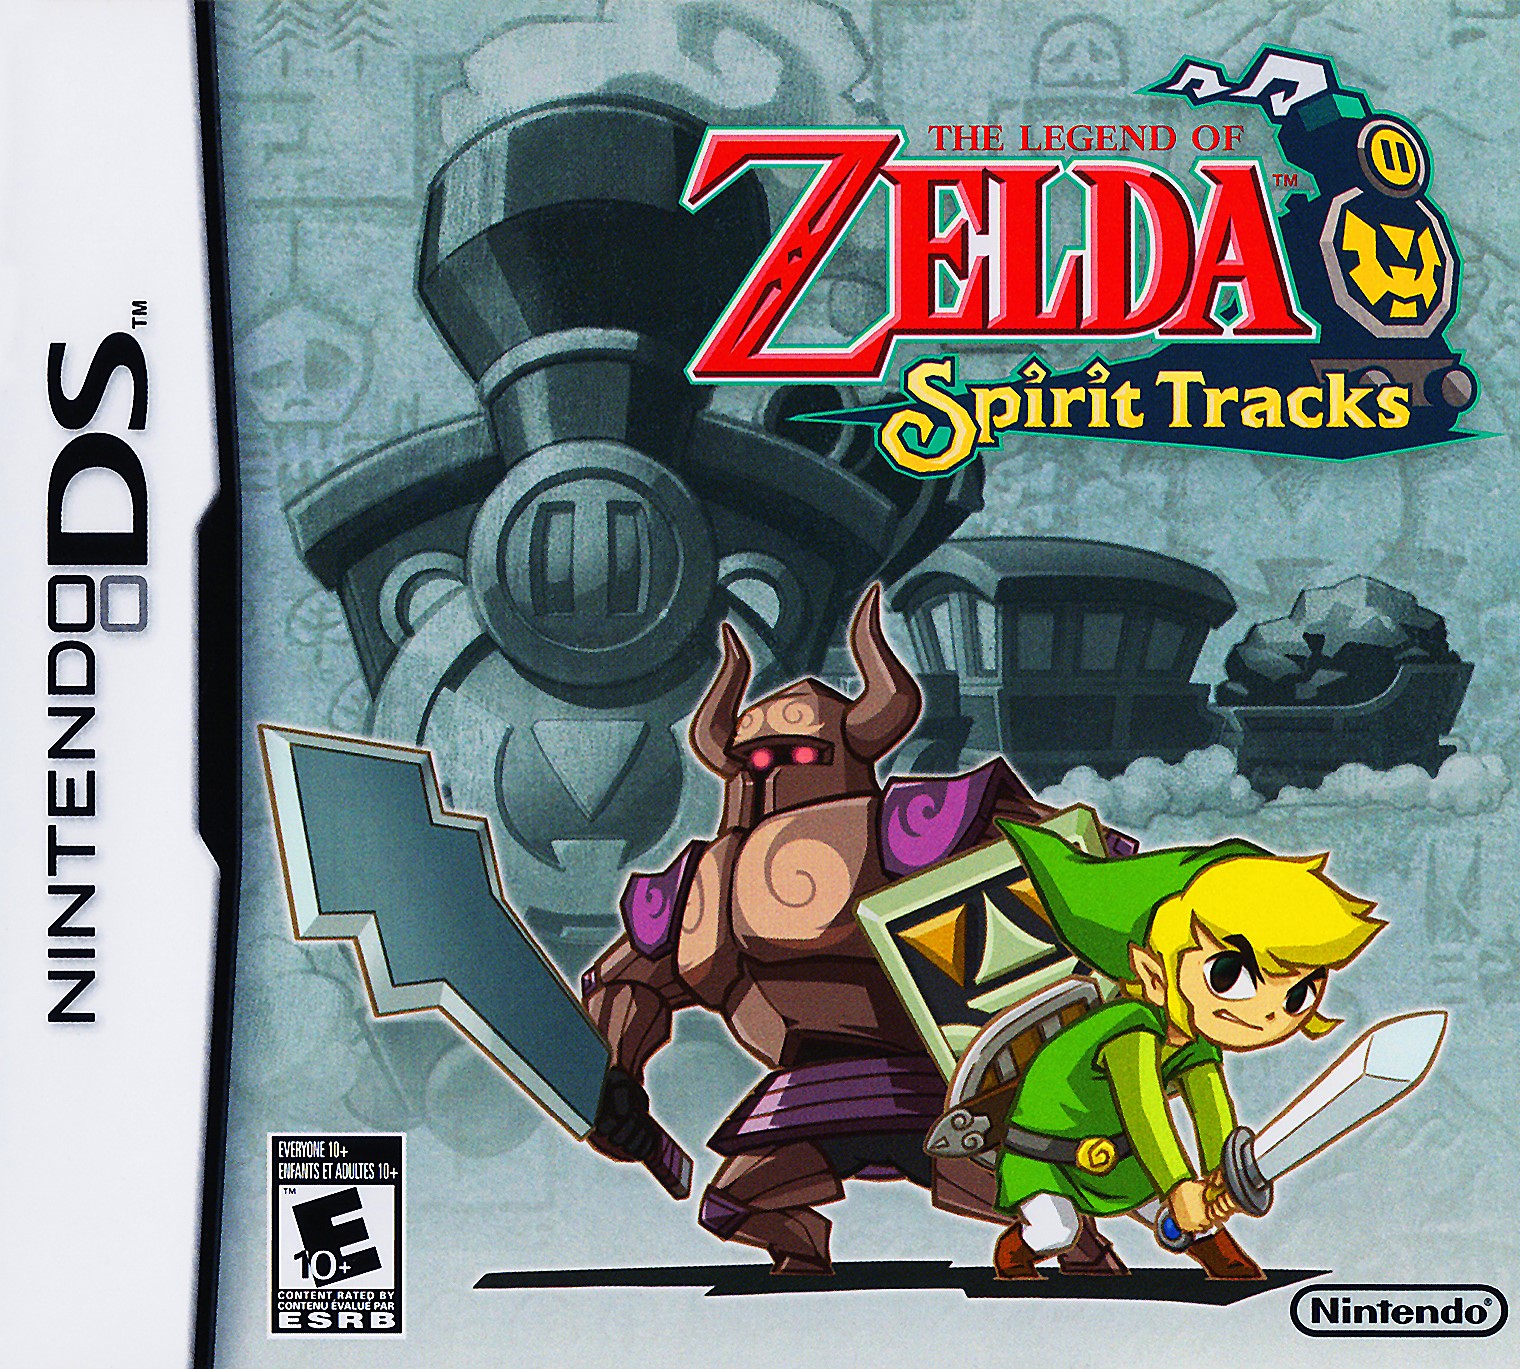 'The Legend of Zelda: Spirit Tracks'